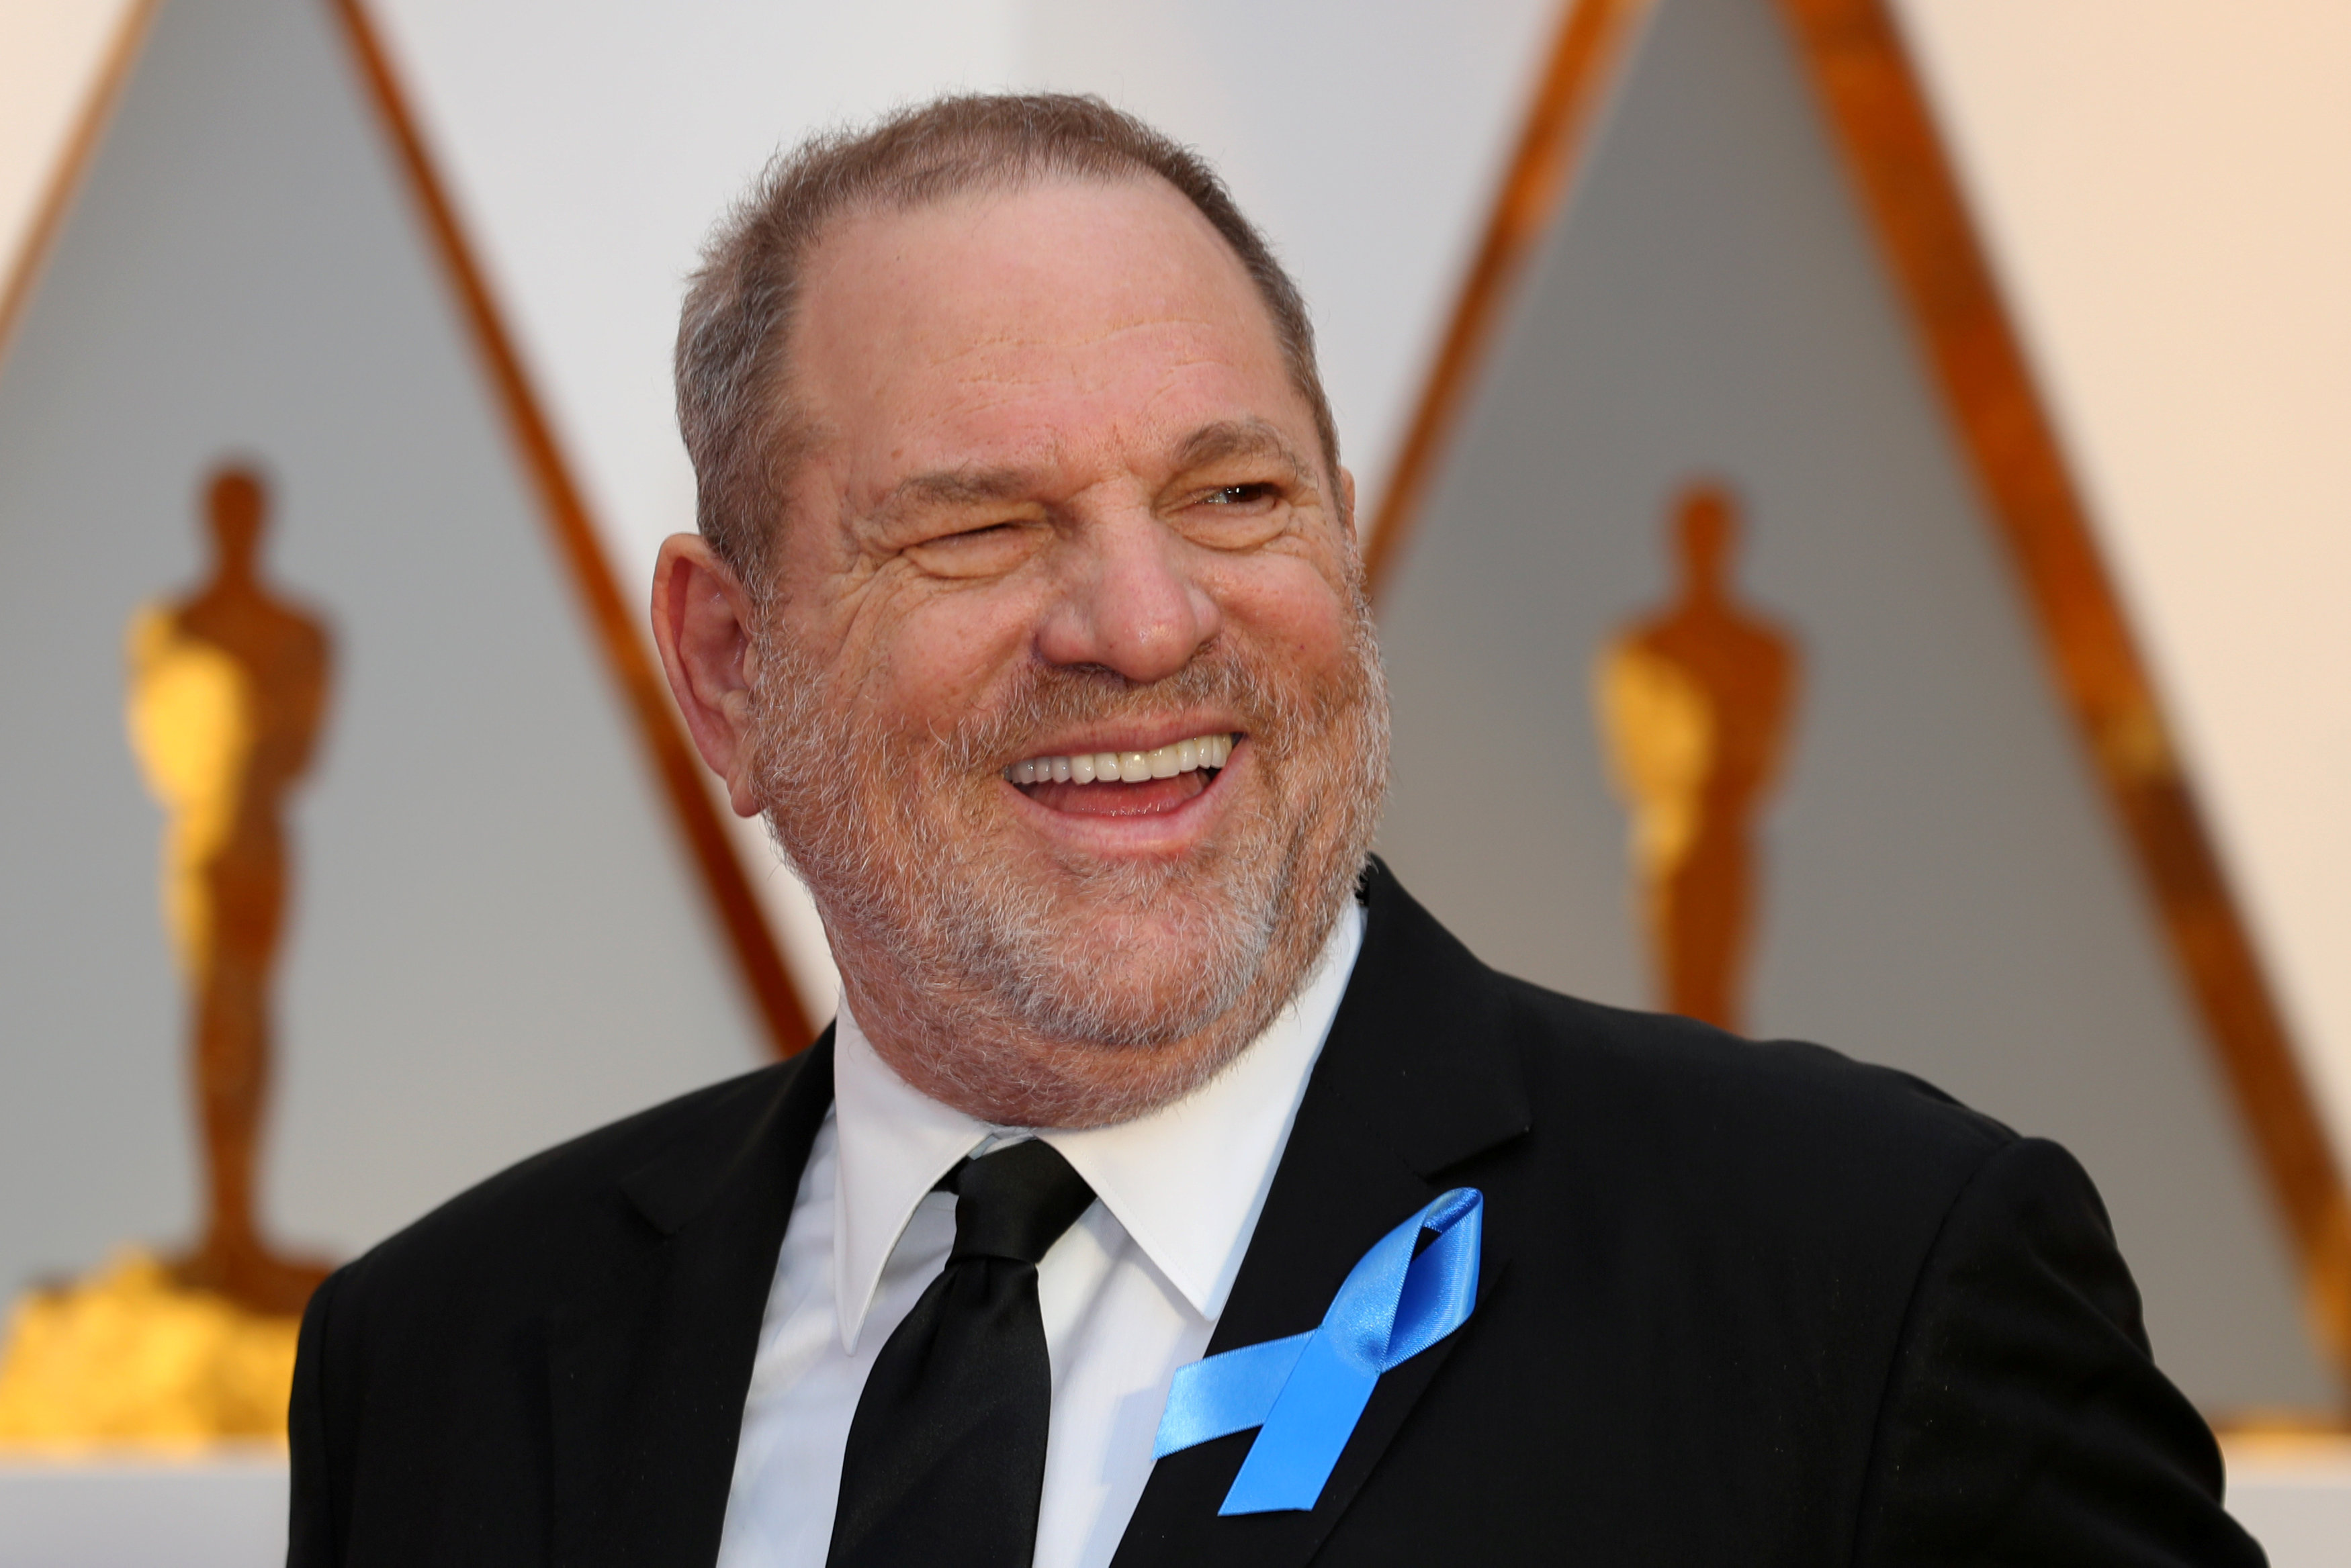 Acusan a Harvey Weinstein de forzar sexualmente otra mujer